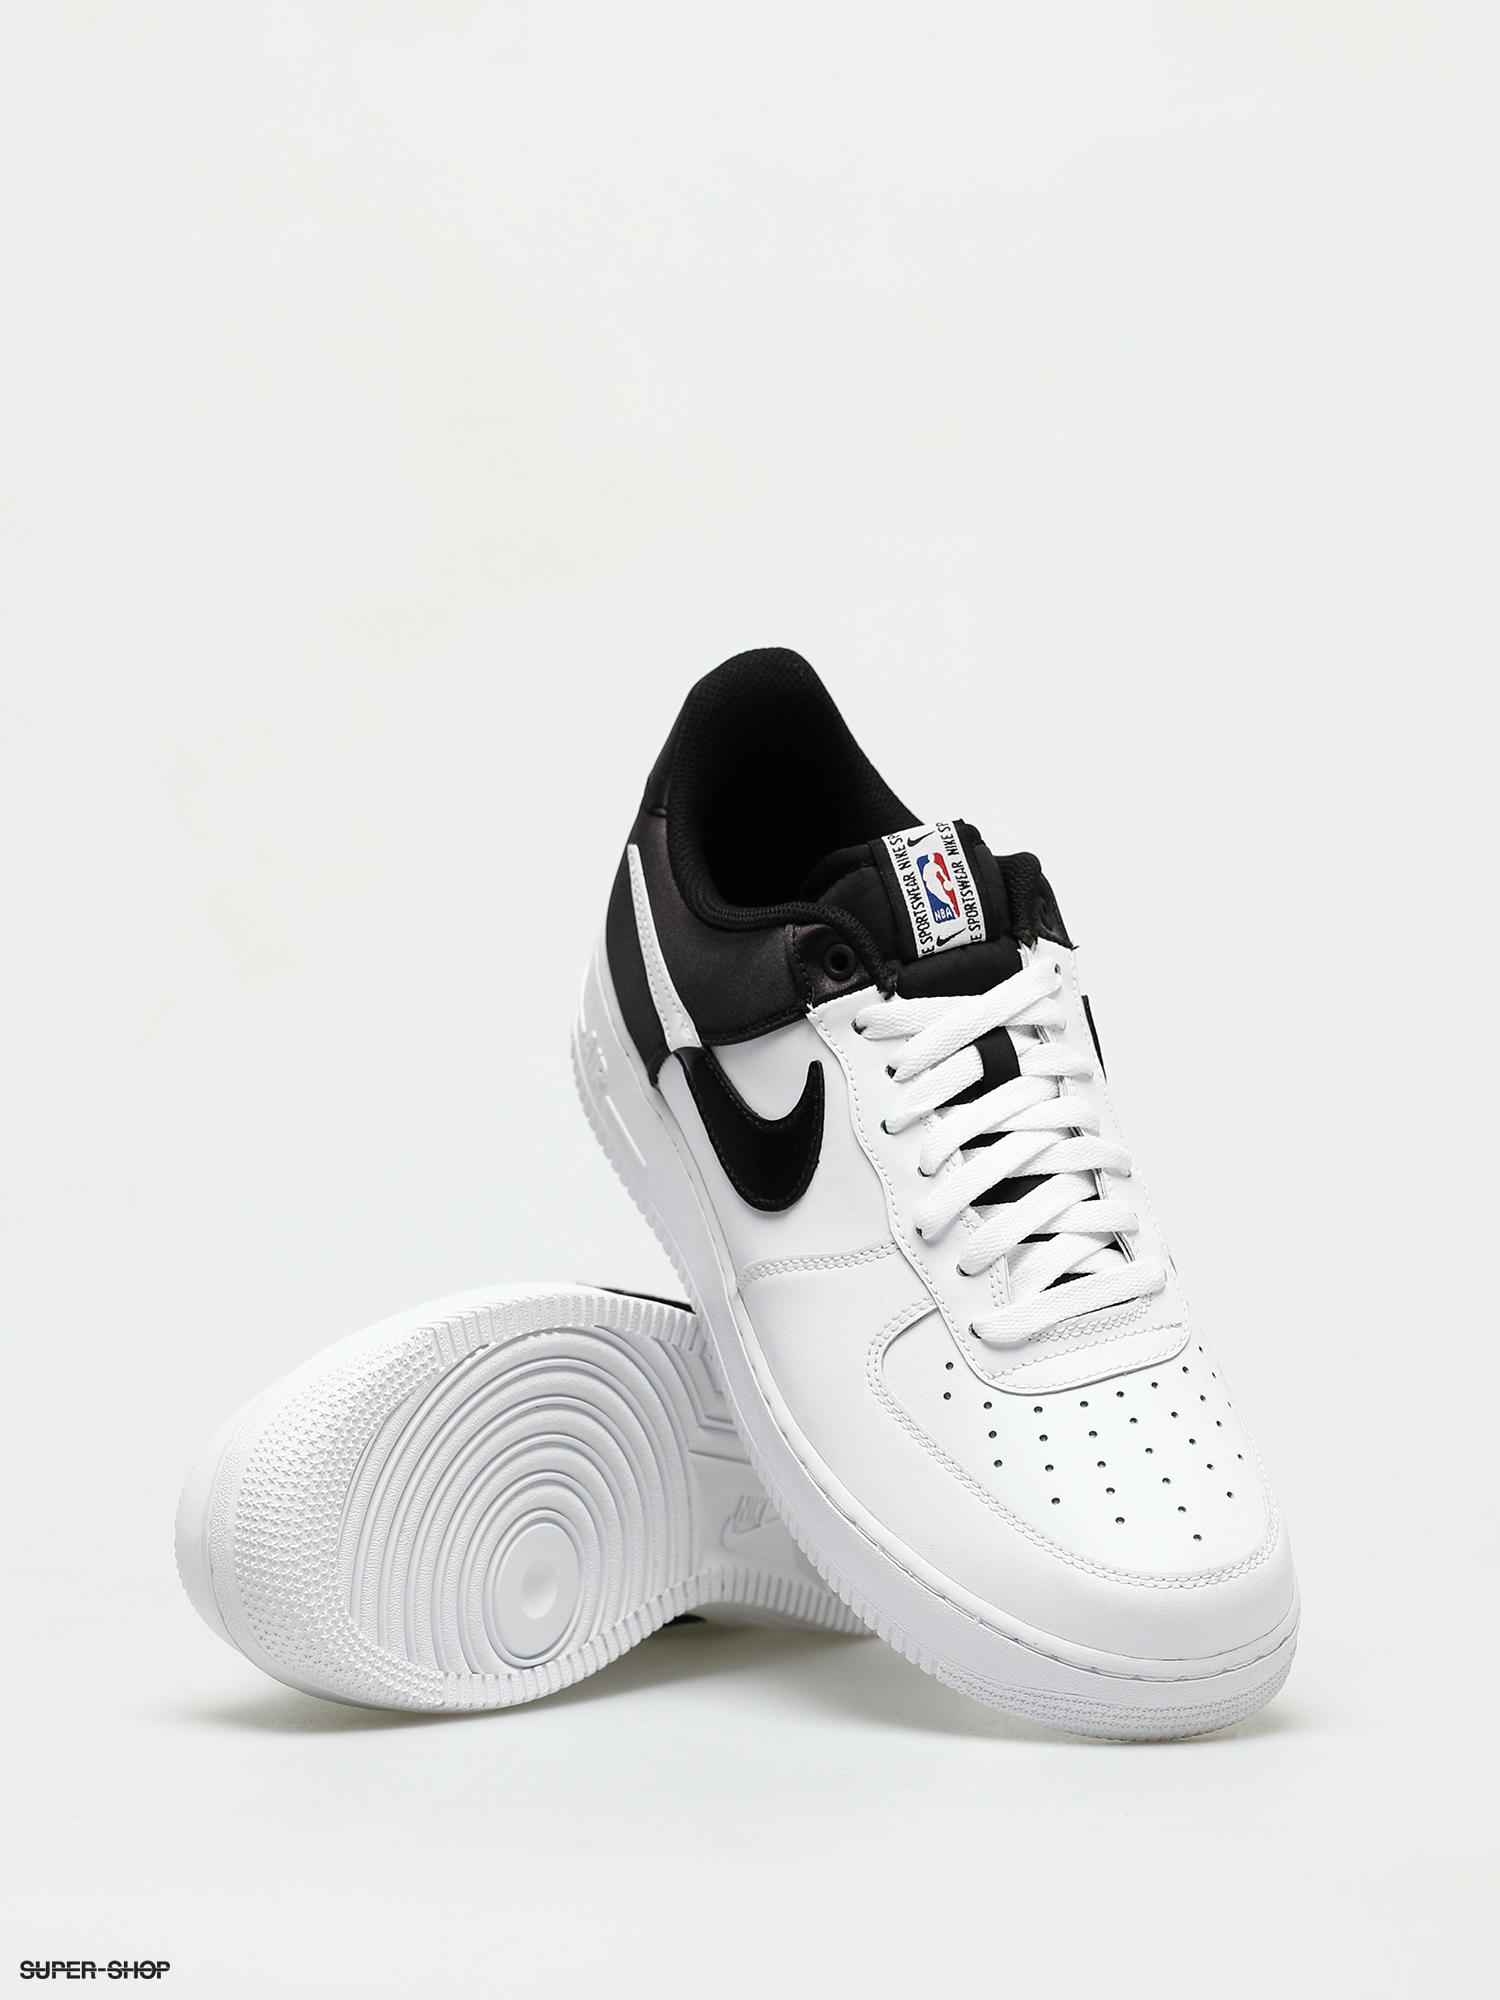 Nike Air Force 1 '07 LV8 NBA Black/White